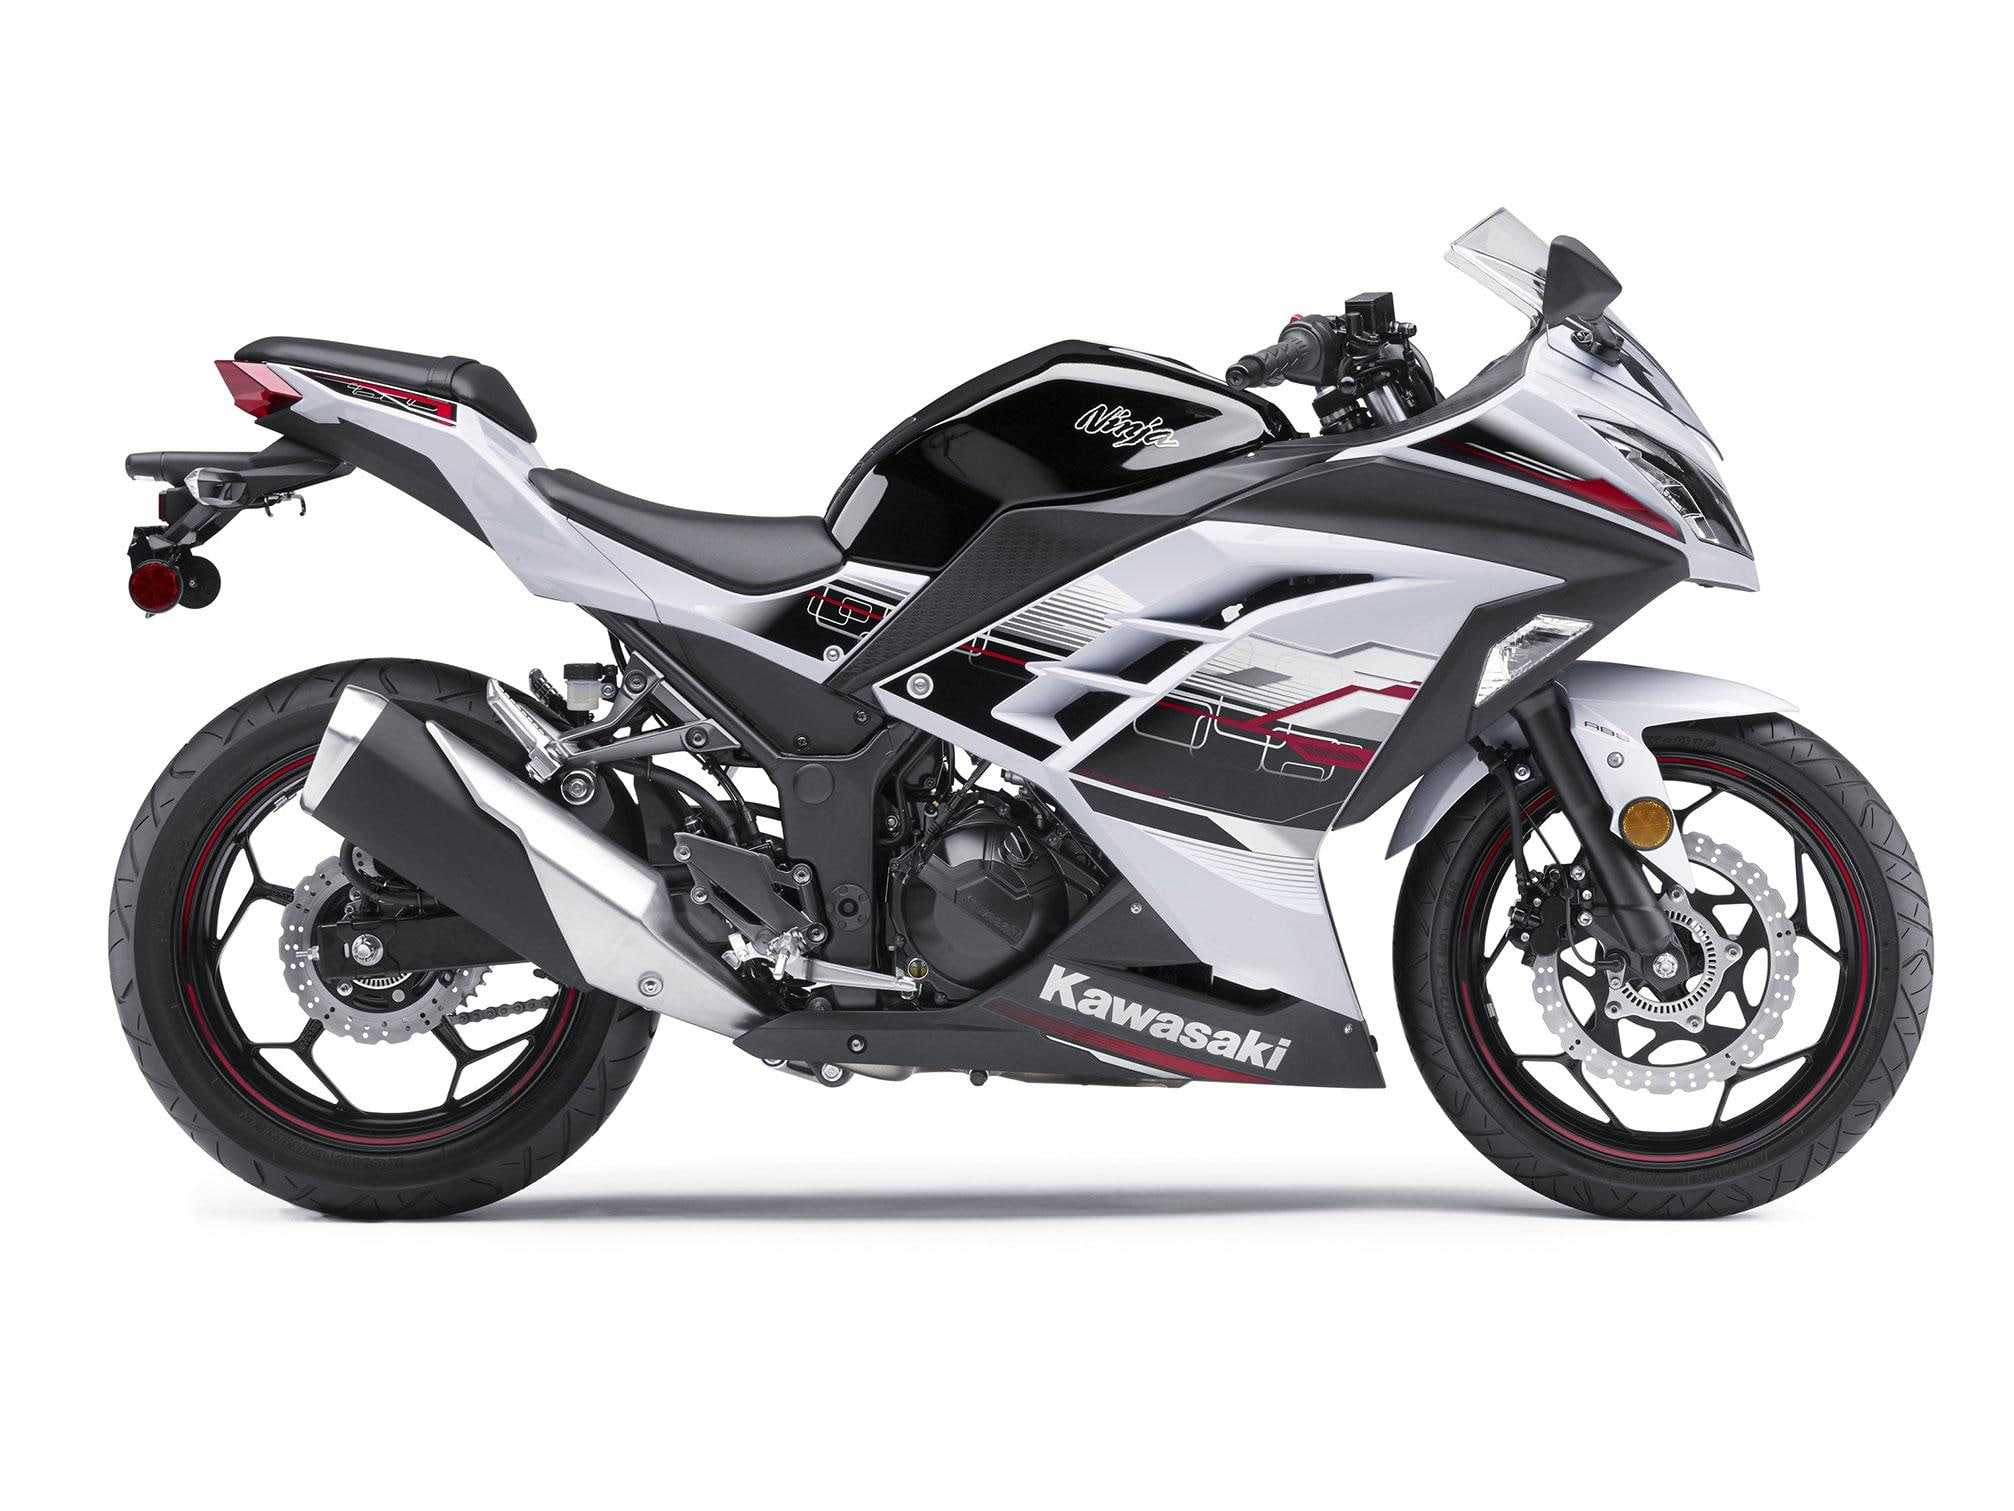 2014 Kawasaki Ninja 300 Abs Gs High Resolution Pictures, motorcycles